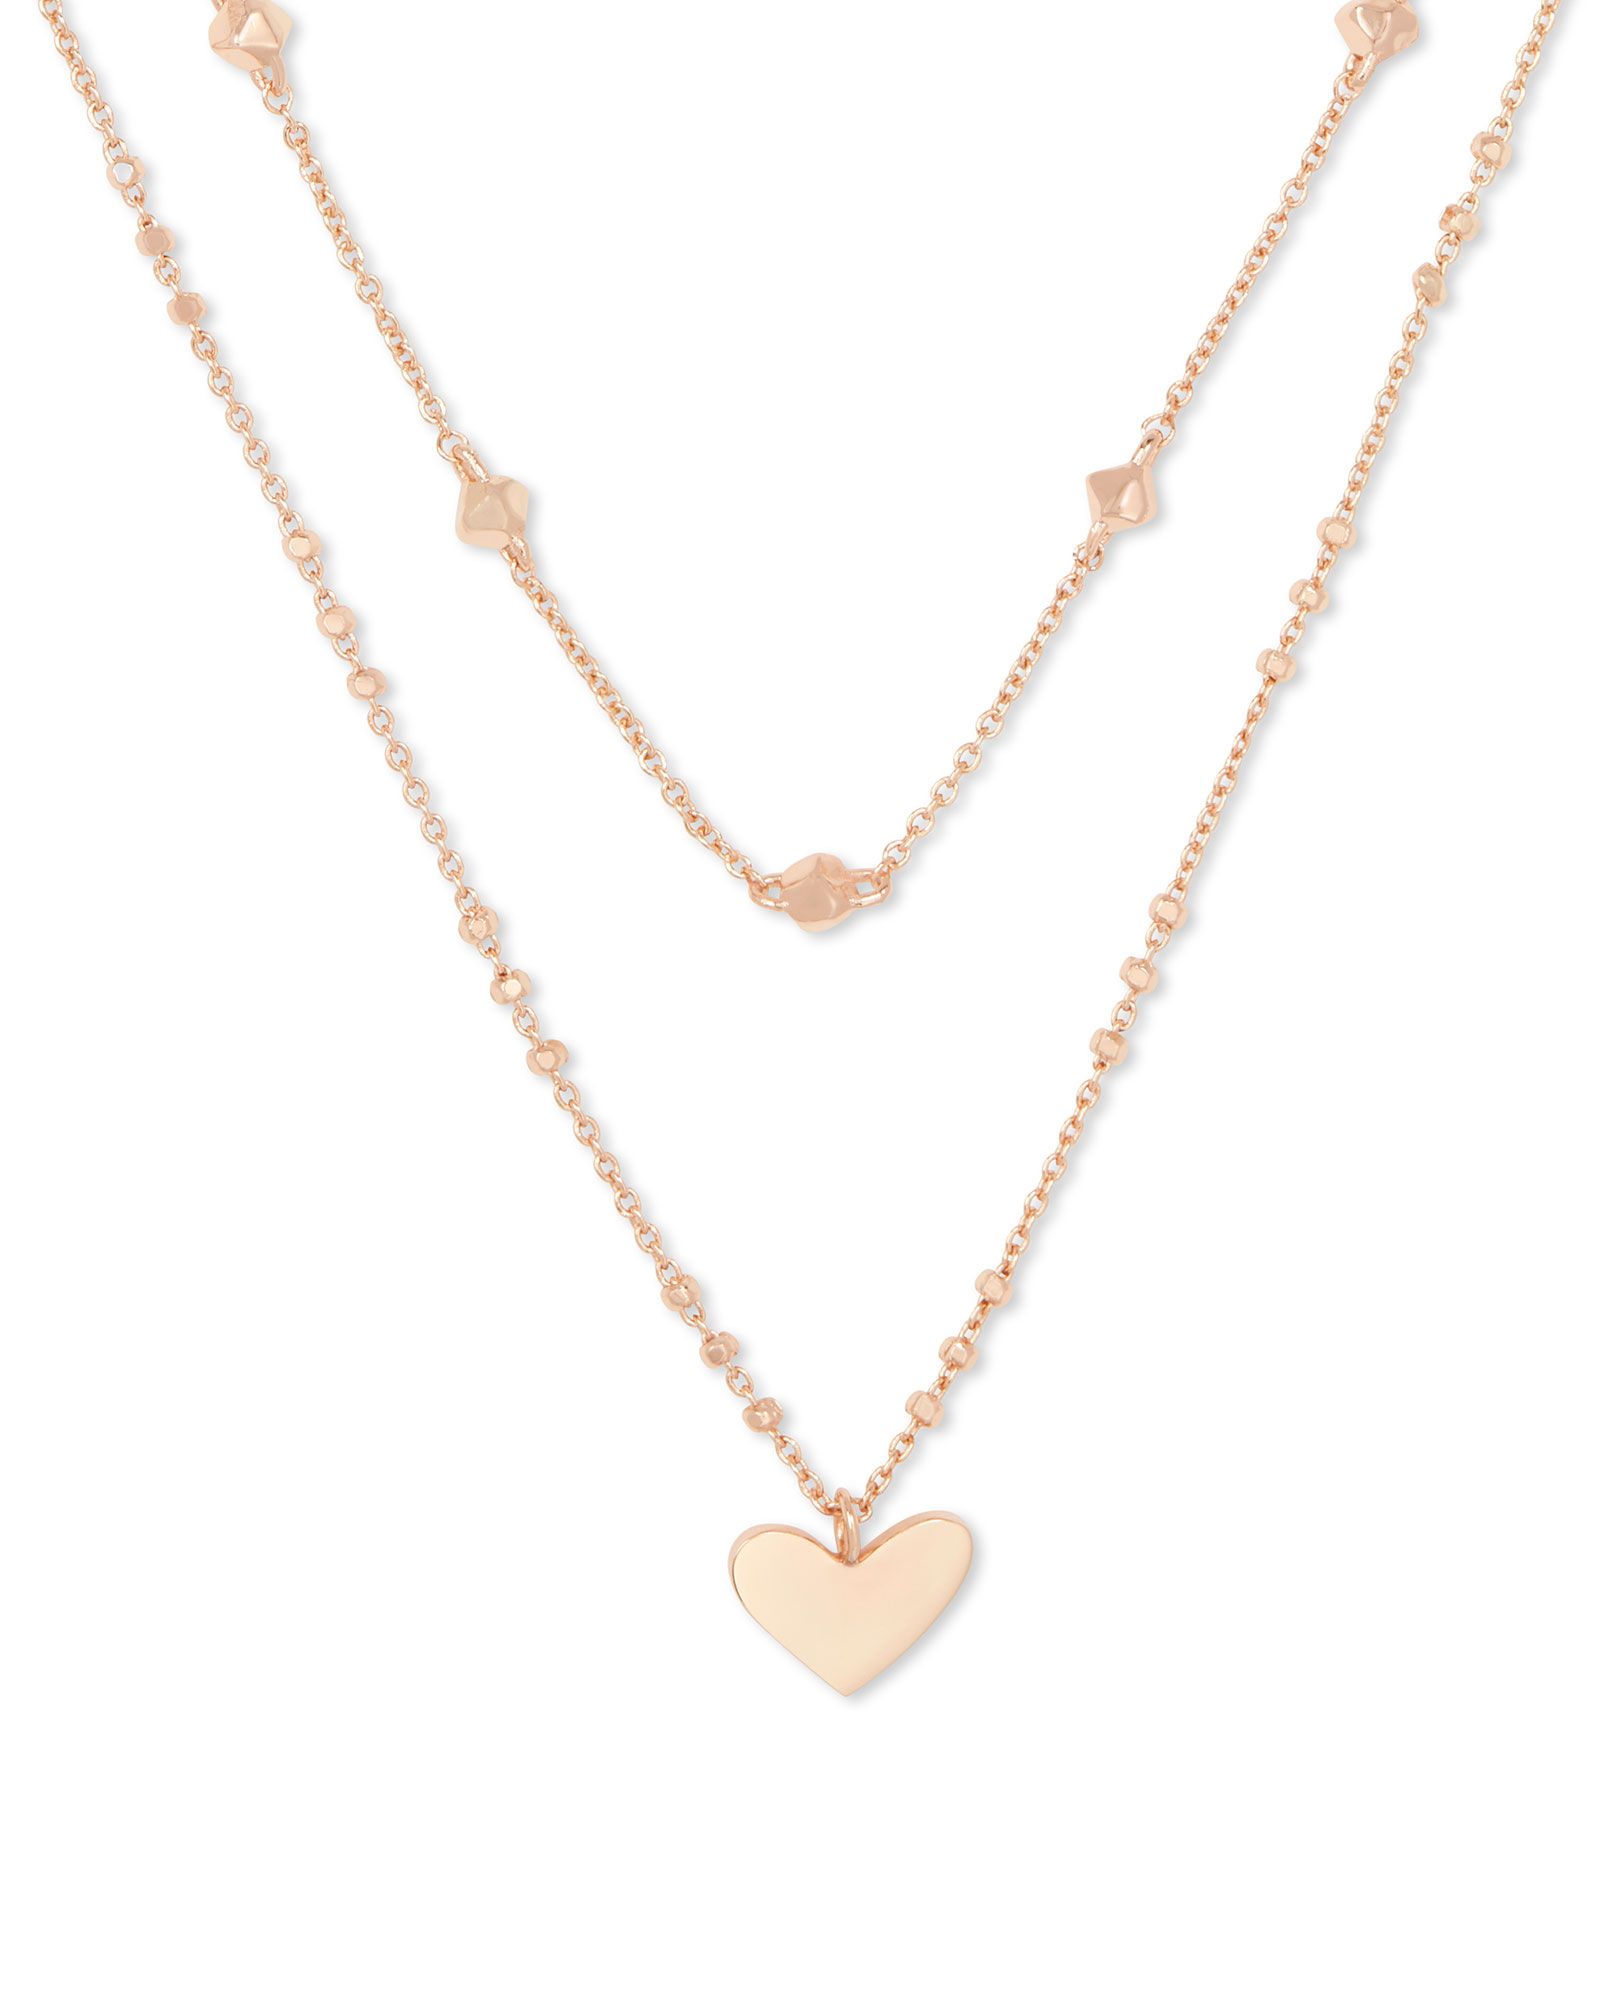 Ari Heart Multi Strand Necklace in Gold | Kendra Scott